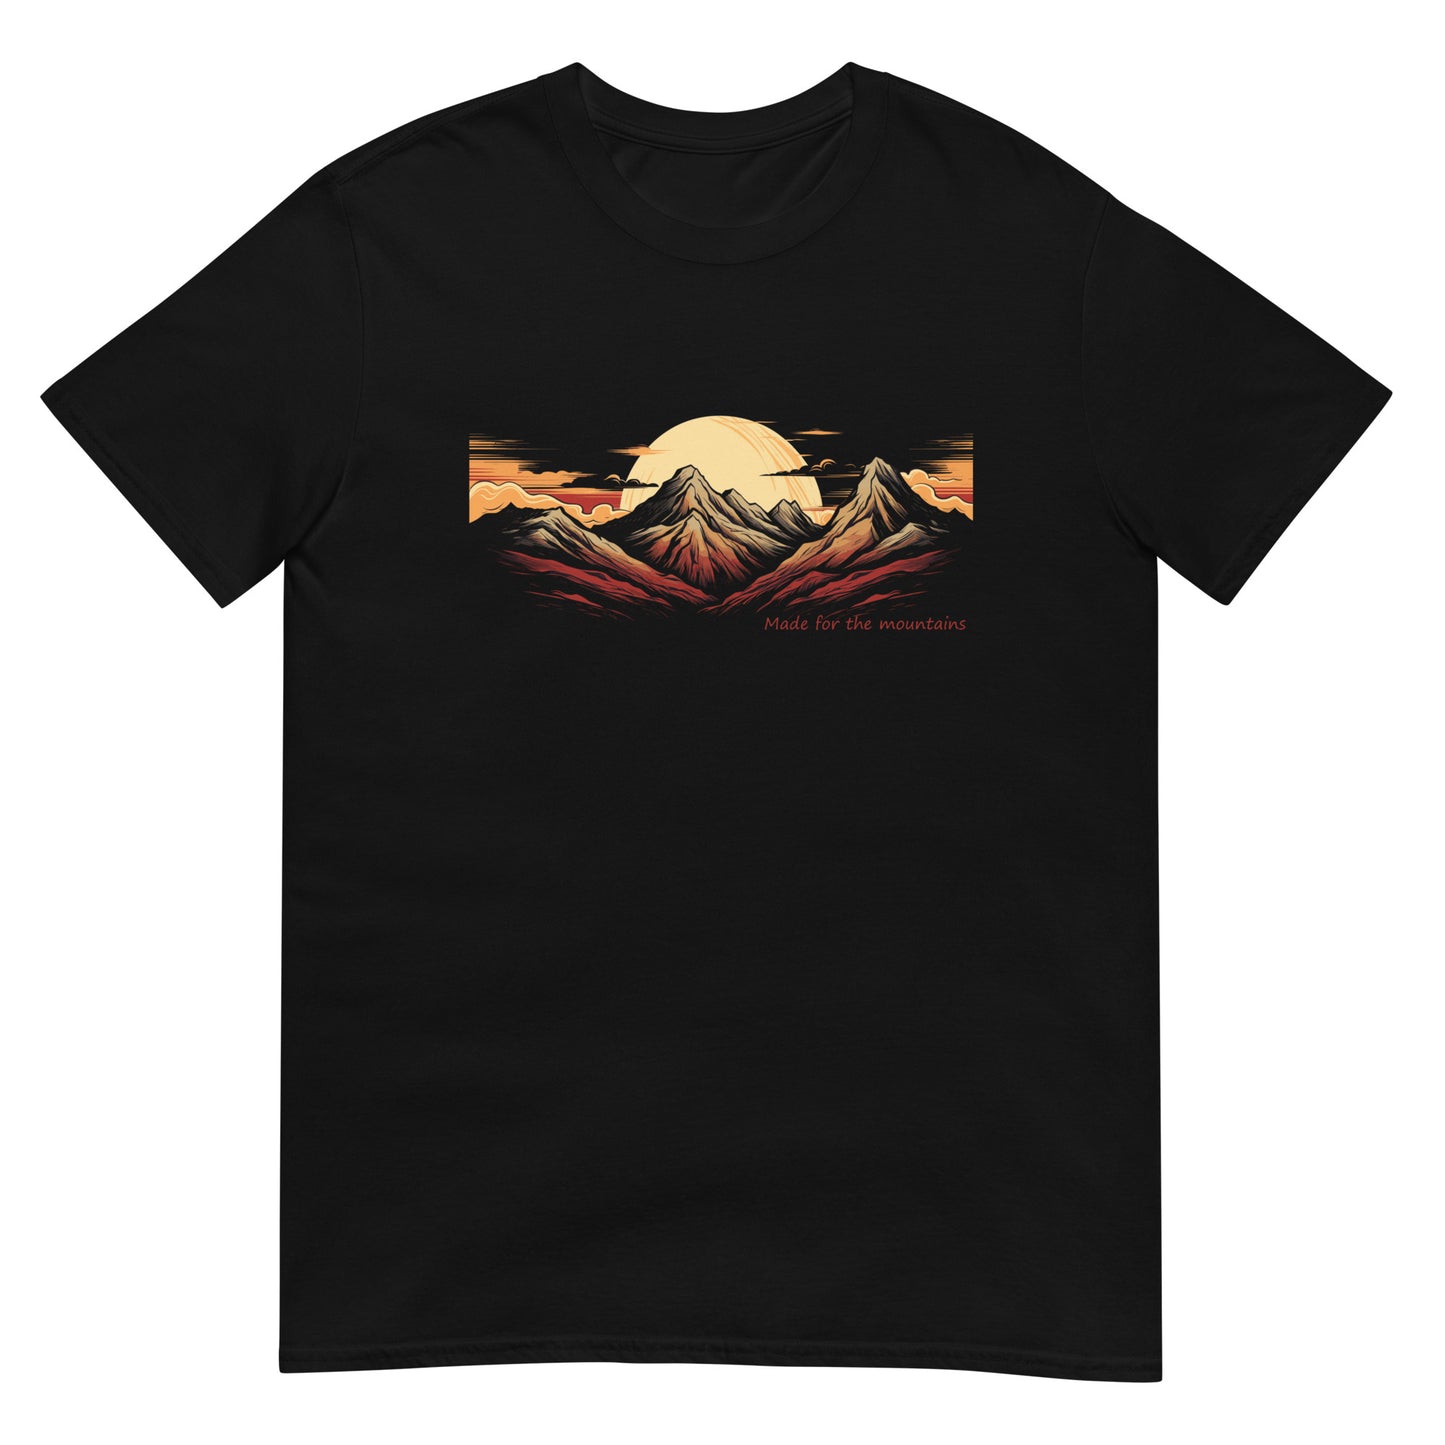 Unisex marškinėliai: "Made for the mountains" 2